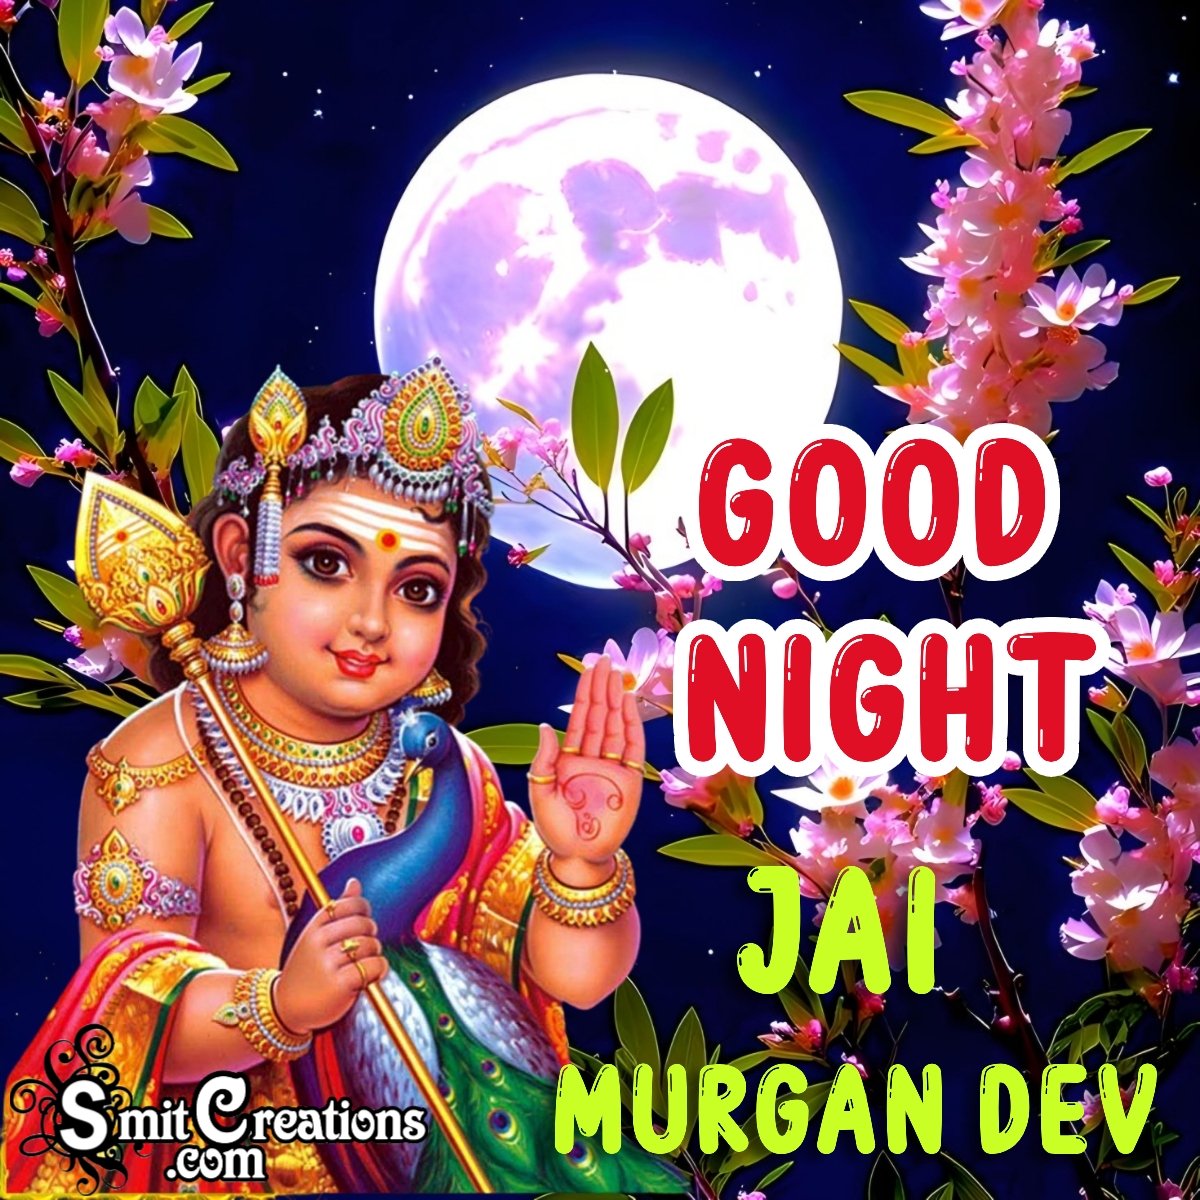 Good Night Jai Murgan Dev